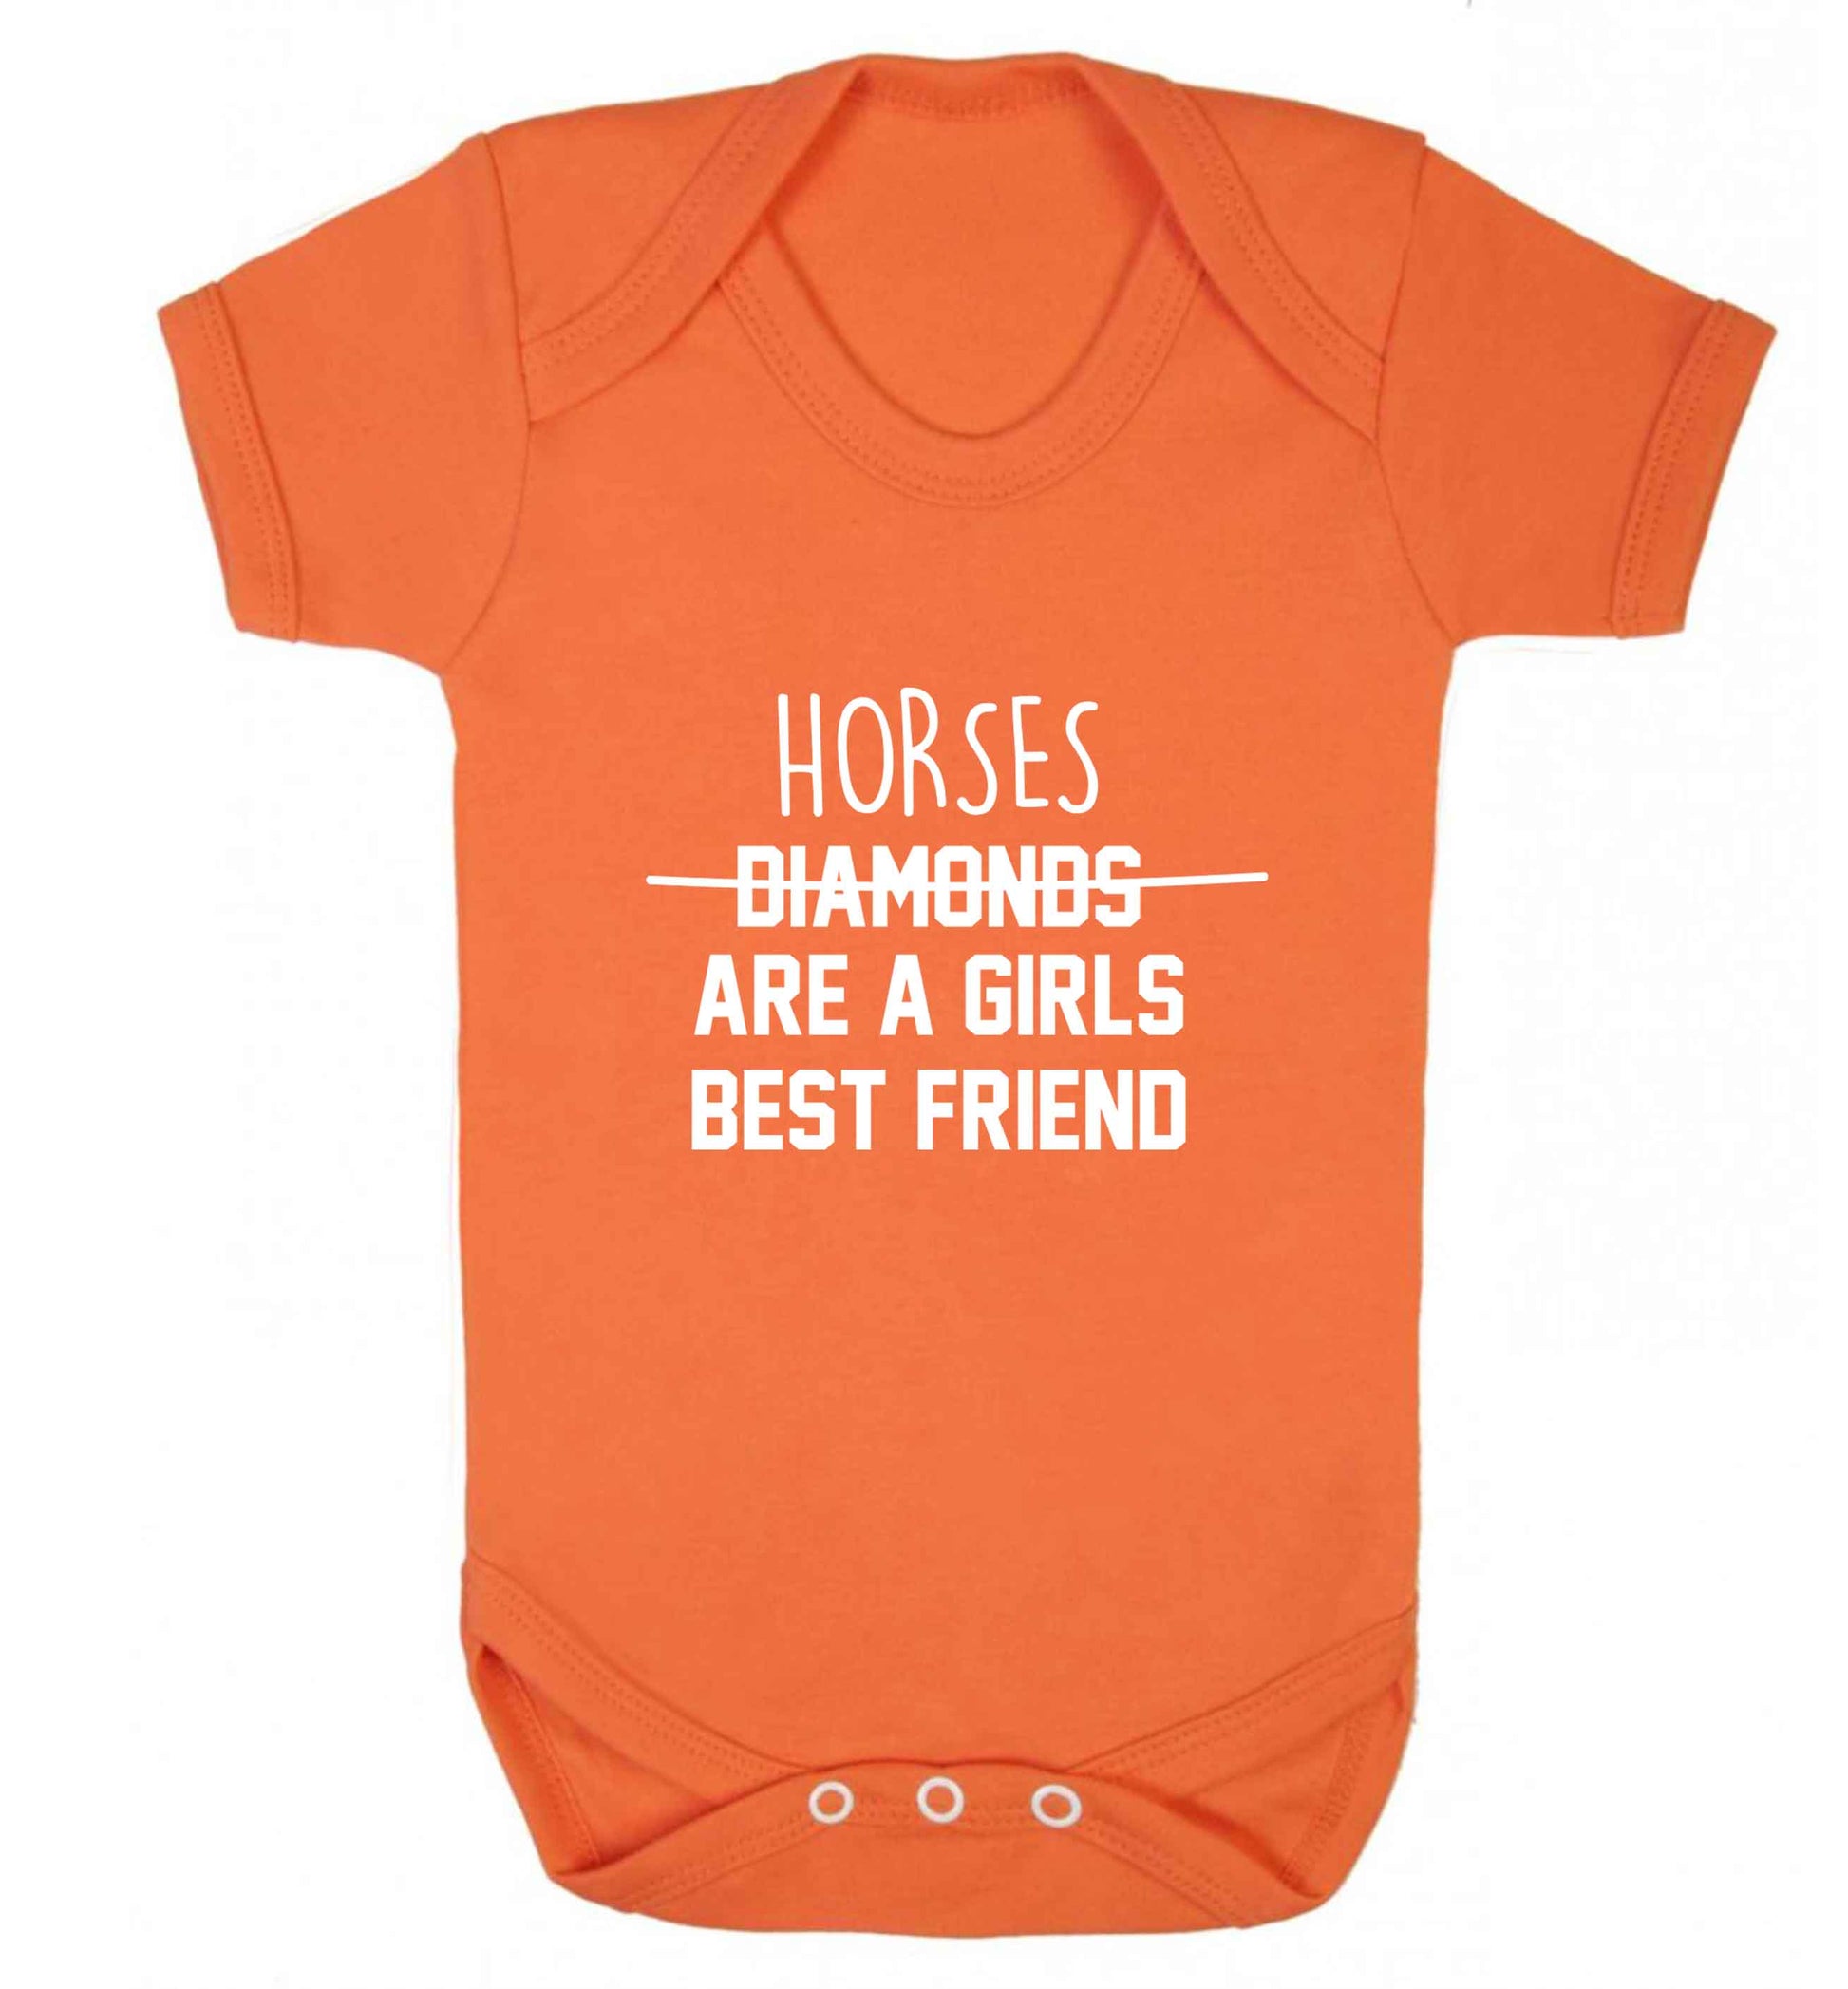 Horses are a girls best friend baby vest orange 18-24 months